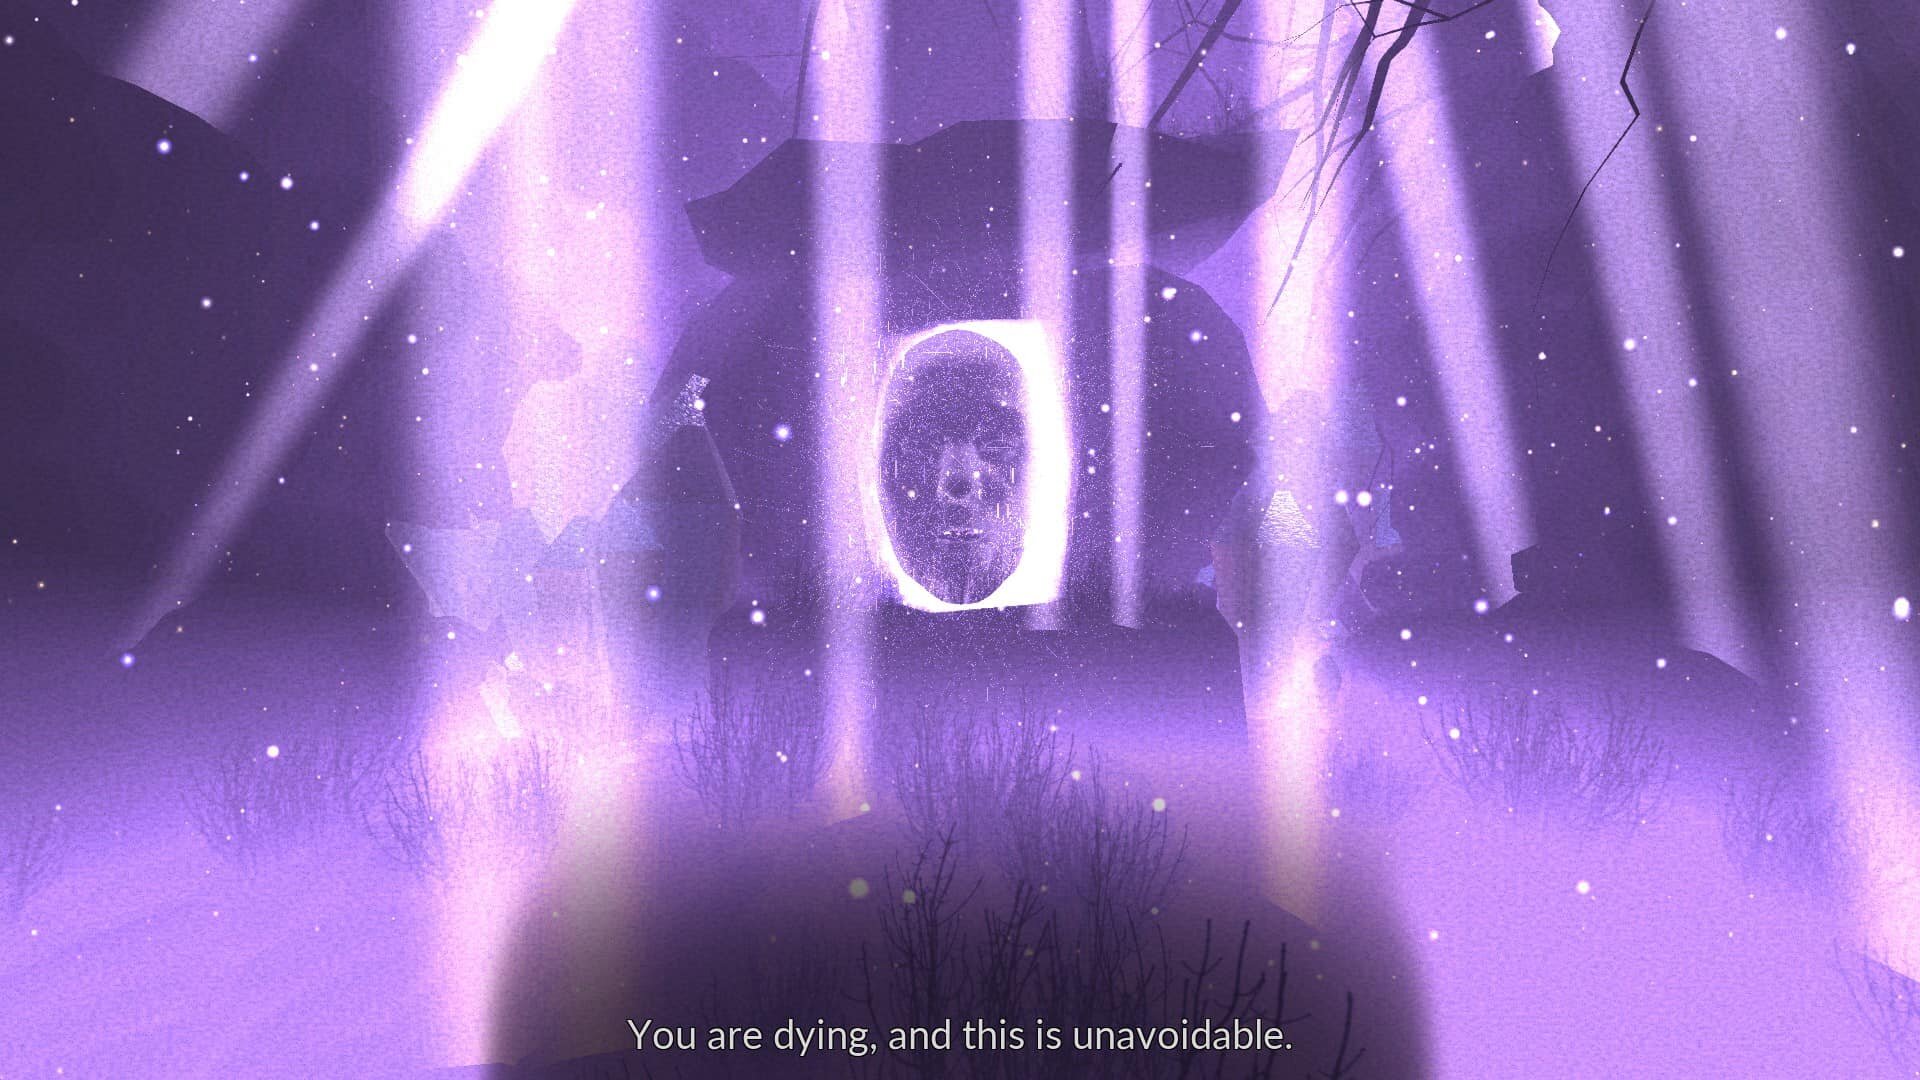 Clinically Dead game screenshot, narrator